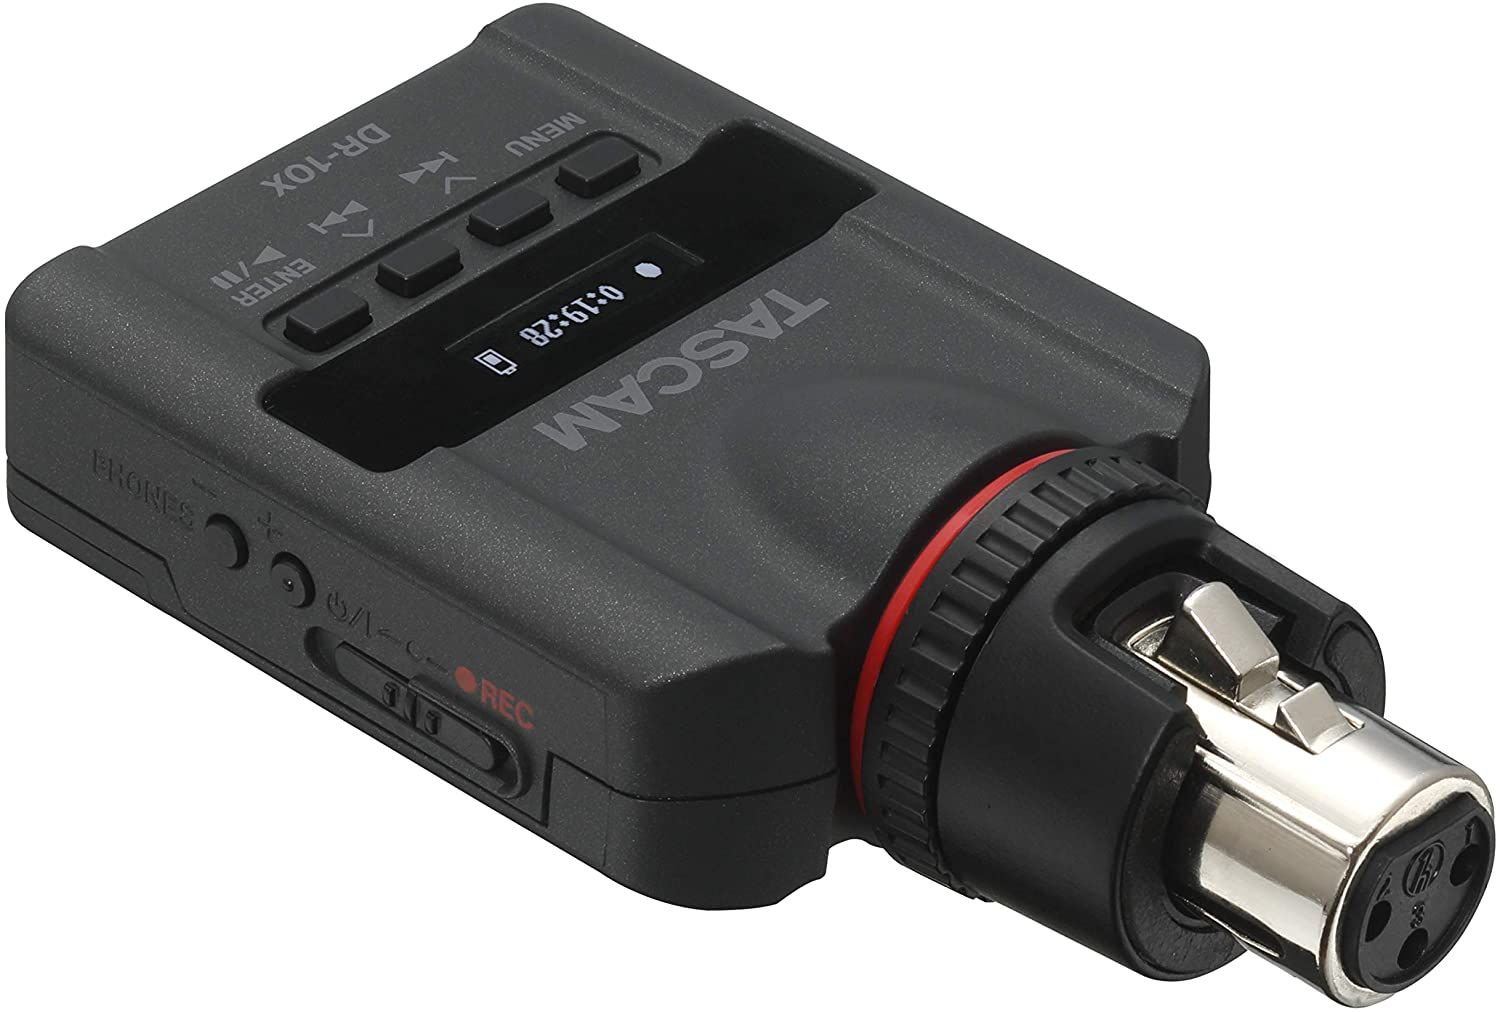 Tascam DR-10X – Mic-attachable audio recorder